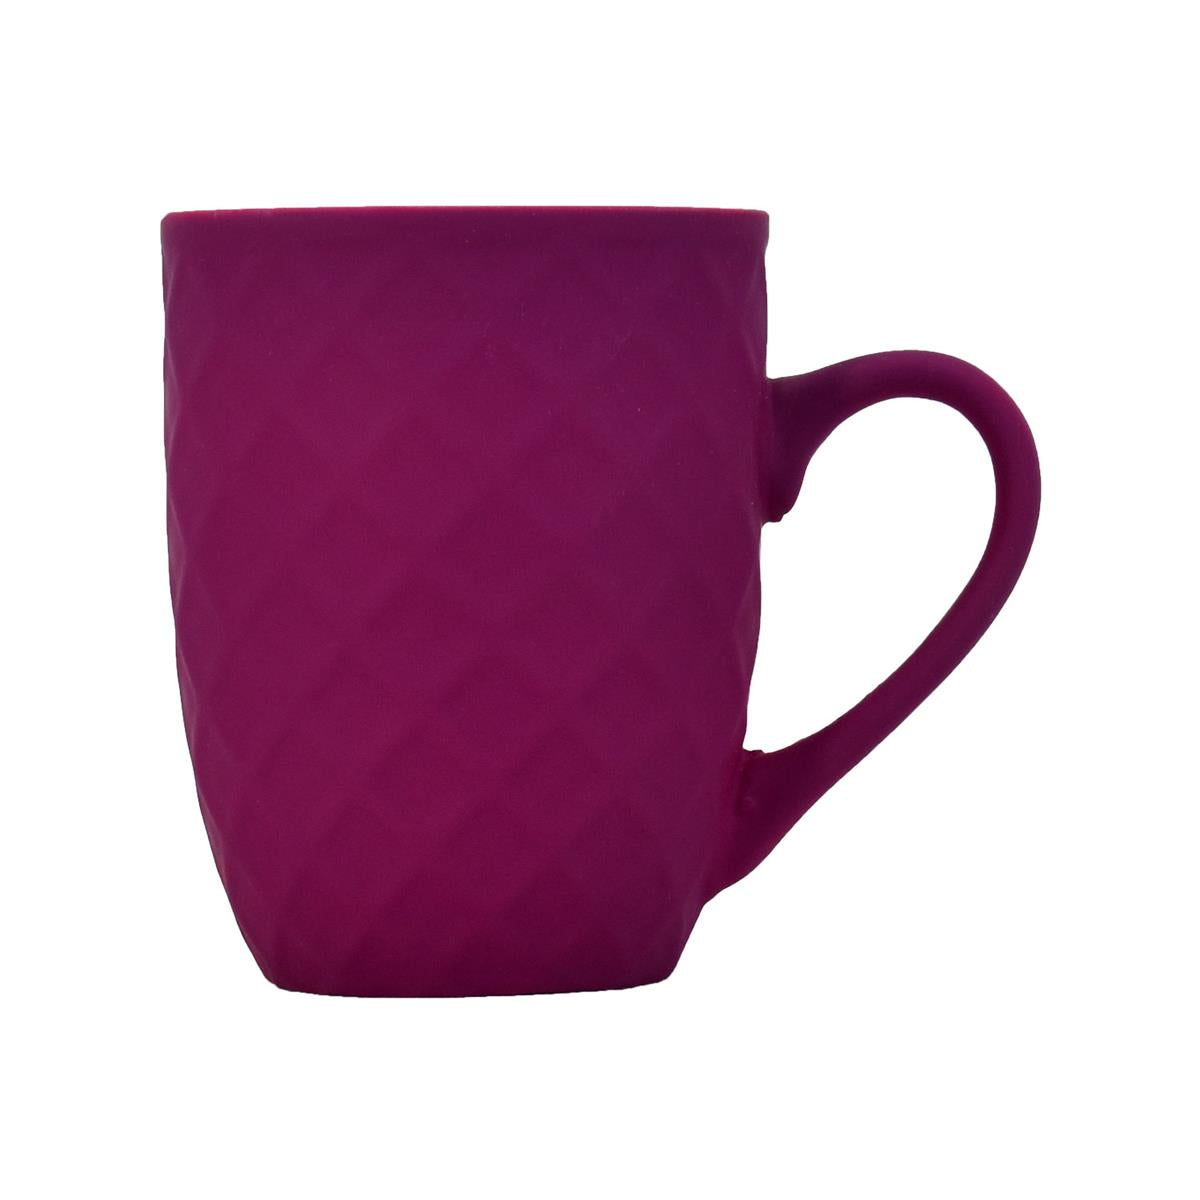 Single Color Ceramic Coffee or Tea Mug with handle - 325ml (D003-A)